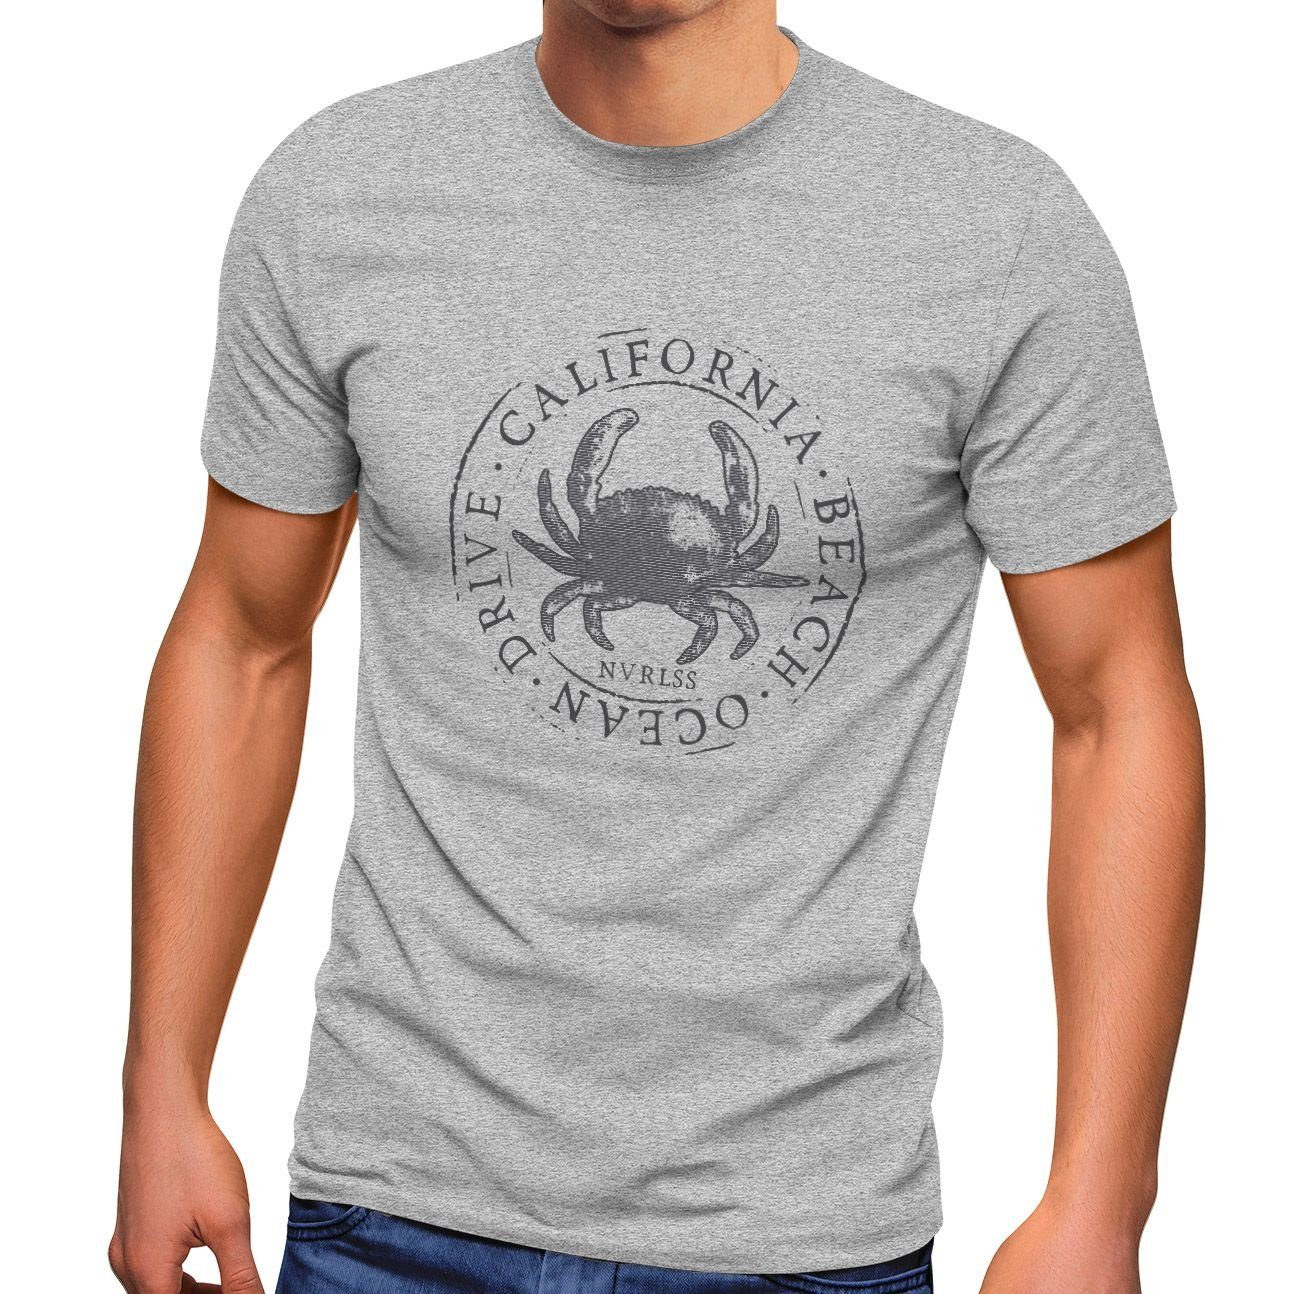 Drive Sommer Ocean Neverless® Krebs Crab Krabbe T-Shirt Neverless Print Beach Streetstyle Fashion grau California Herren mit Print-Shirt